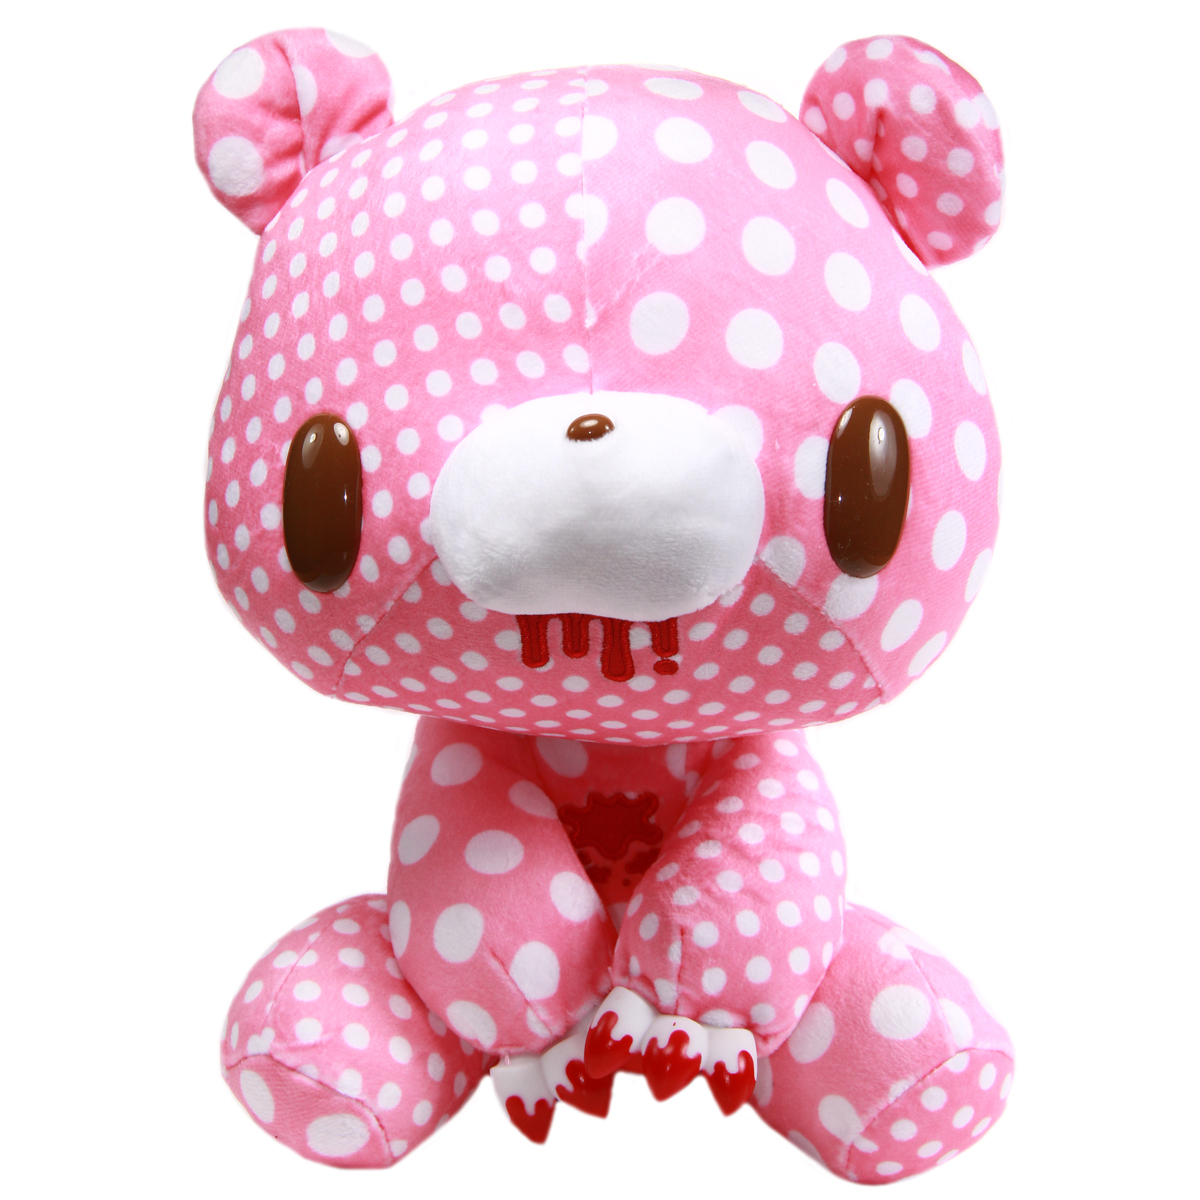 Taito Textillic Crazy Dots Gloomy Bear Plush Doll Pink White GP #556 12 Inches